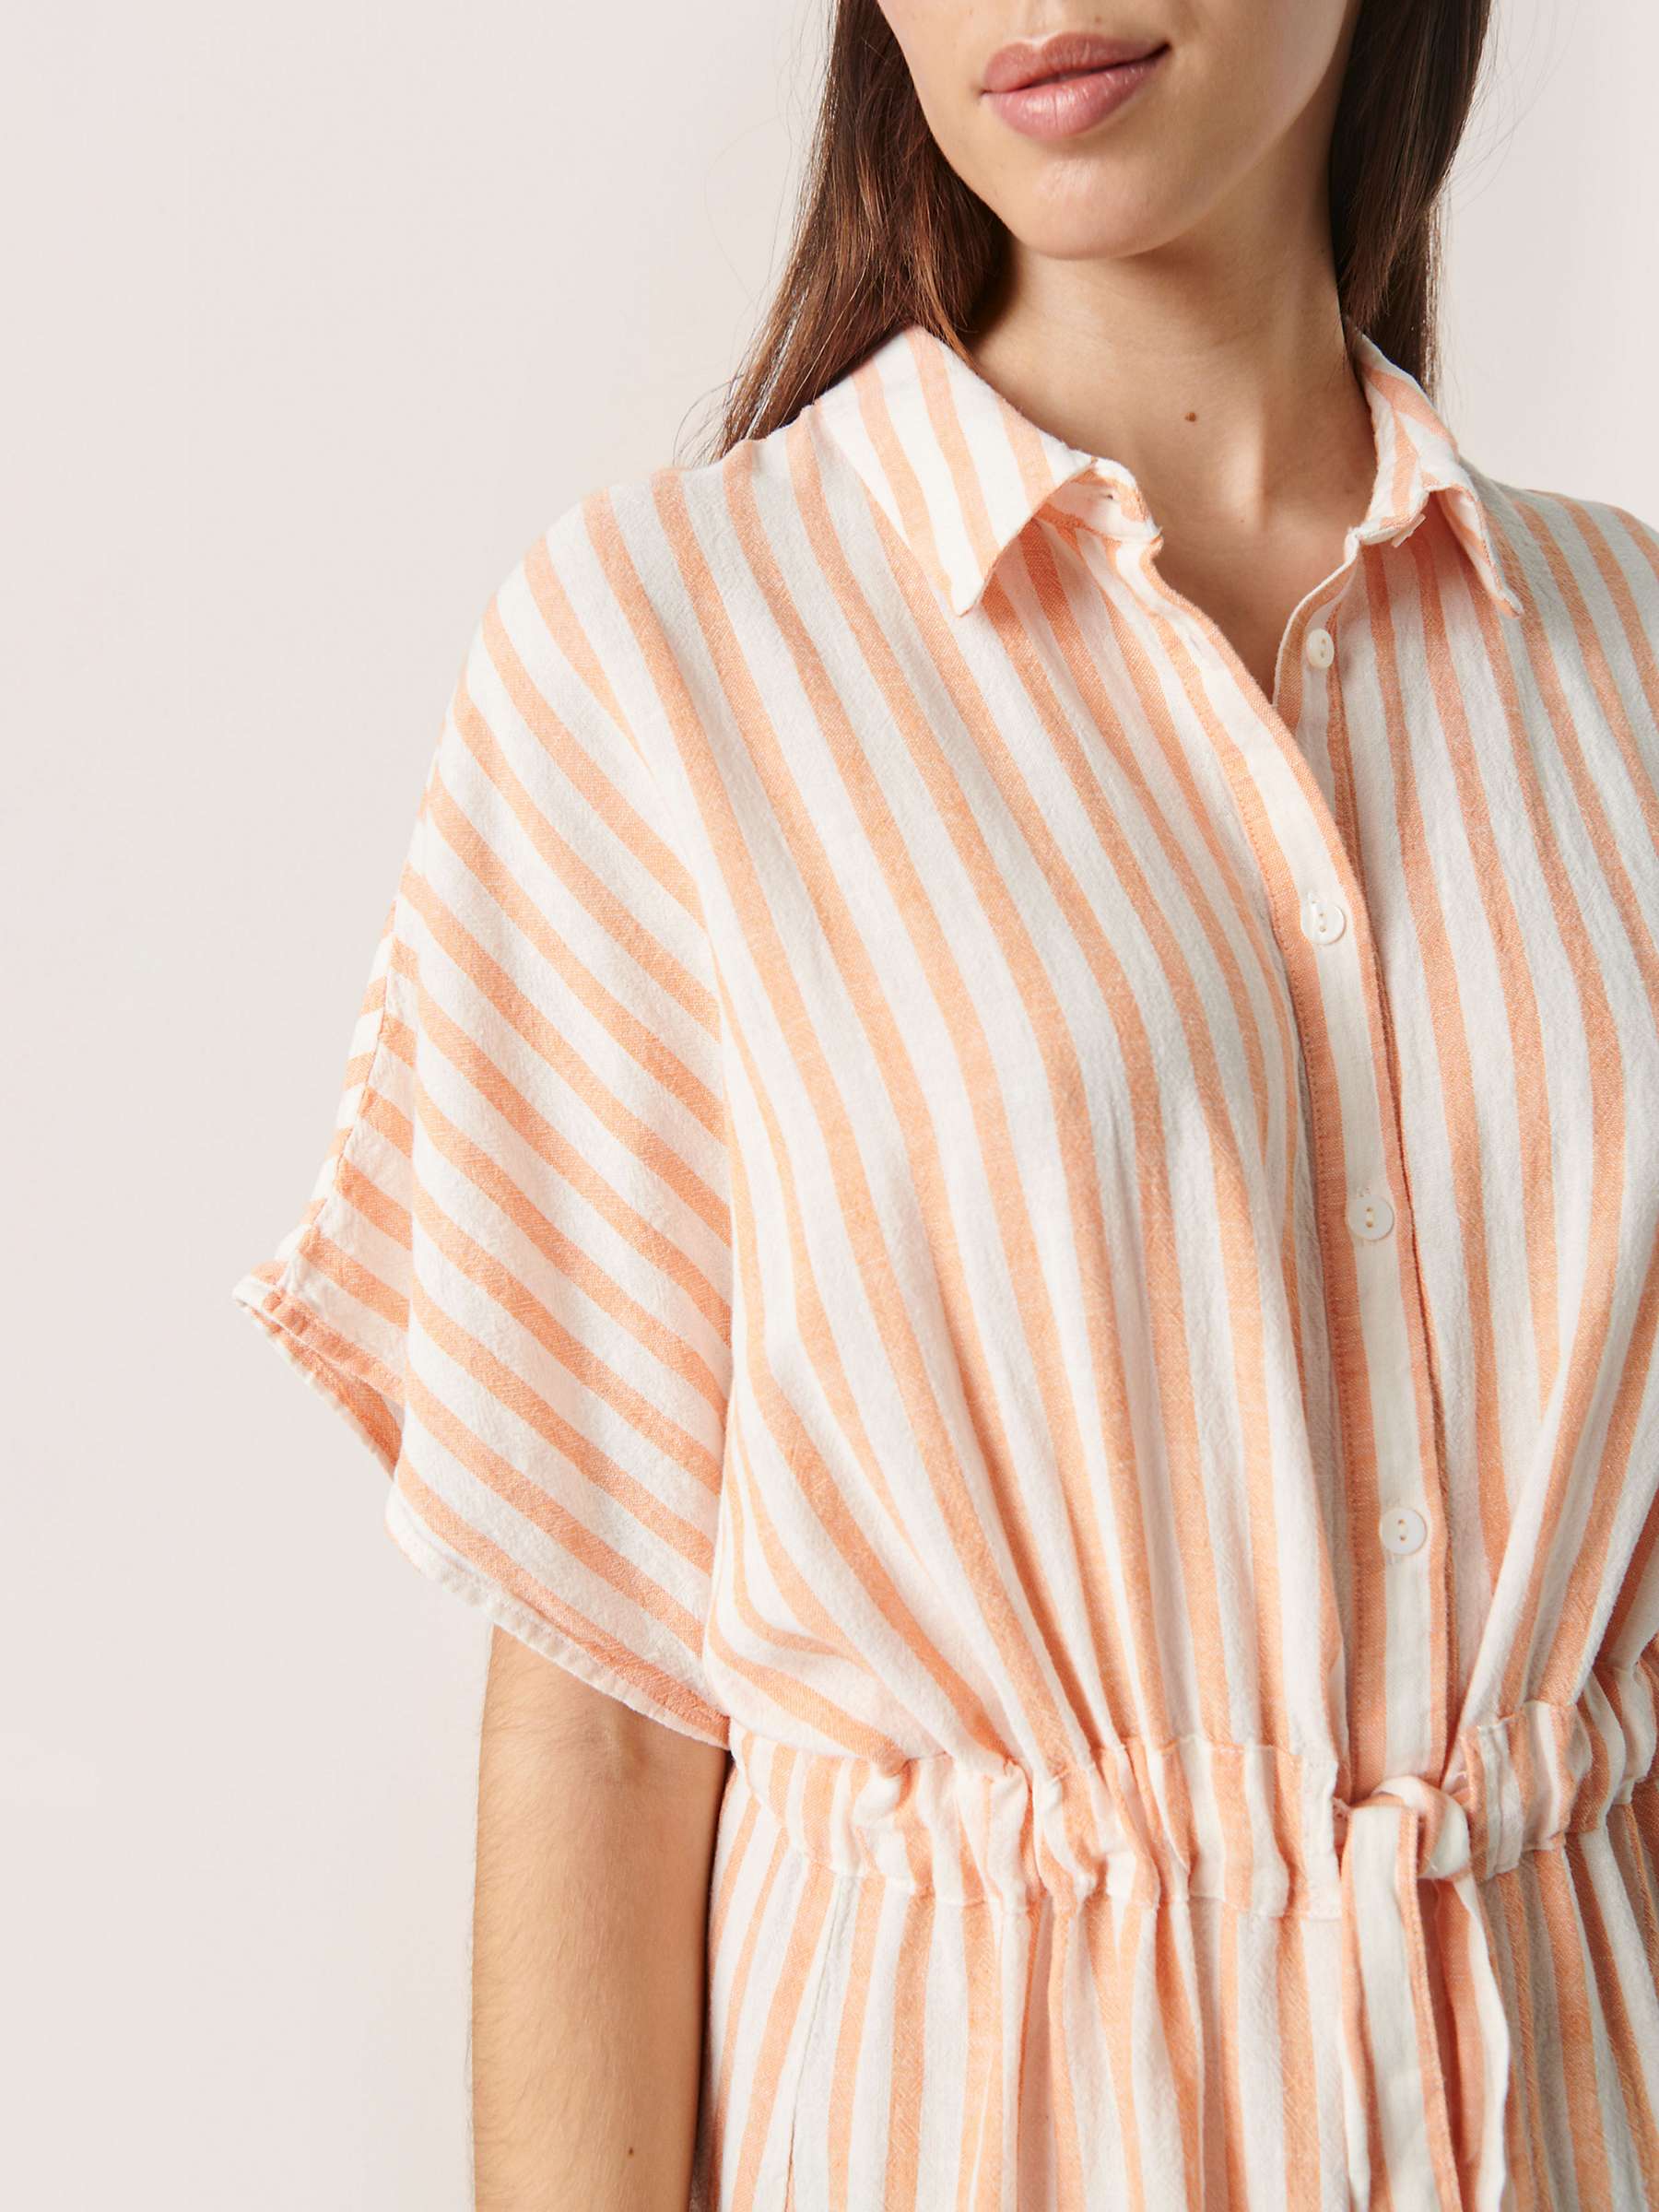 Buy Soaked In Luxury Giselle Stripe Linen Blend Shirt Dress Online at johnlewis.com